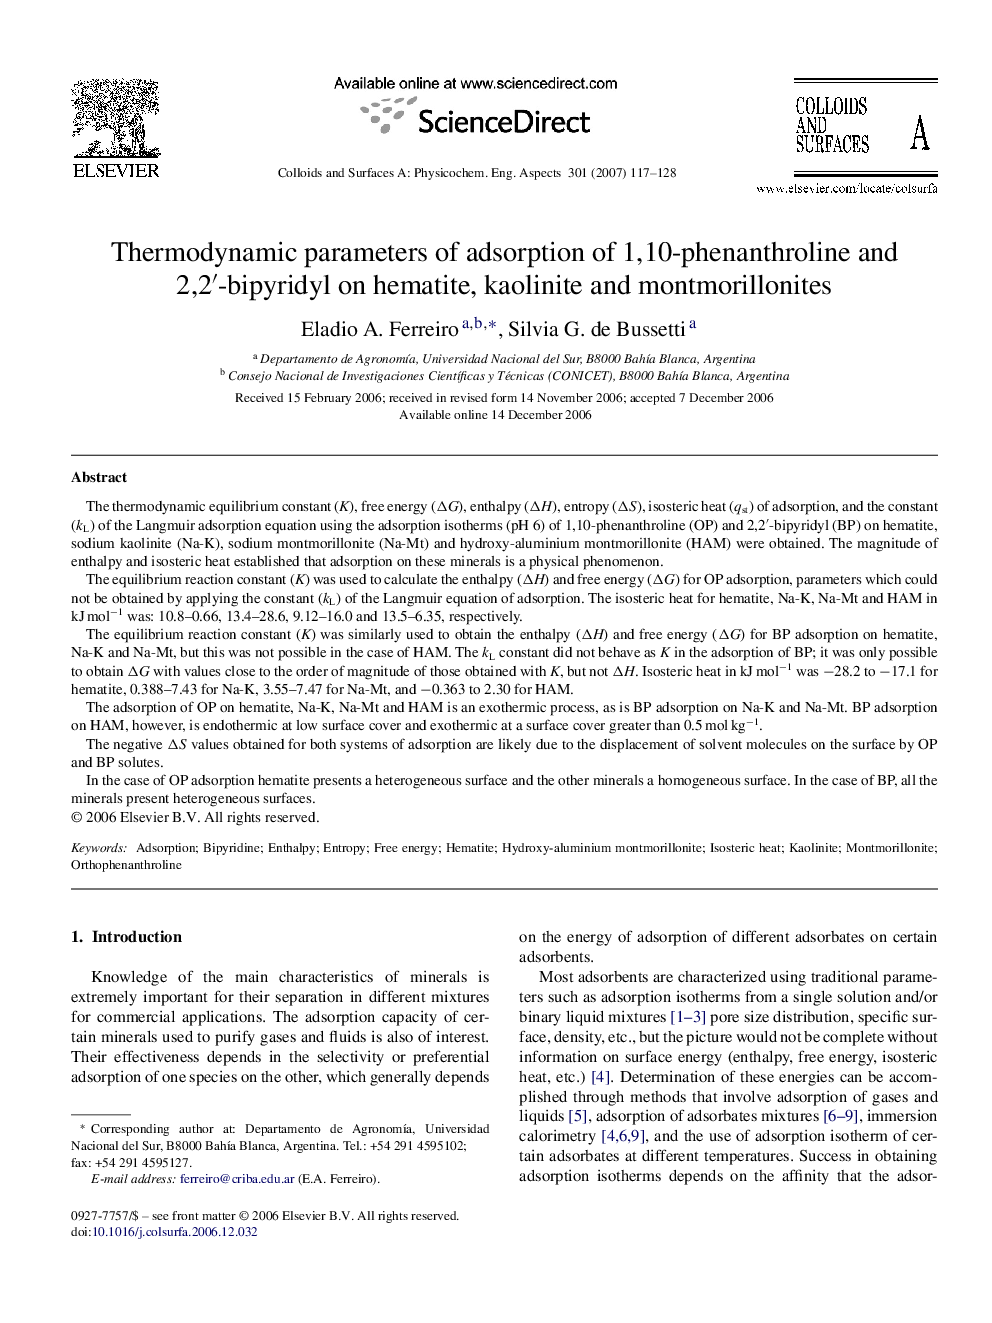 Thermodynamic parameters of adsorption of 1,10-phenanthroline and 2,2′-bipyridyl on hematite, kaolinite and montmorillonites